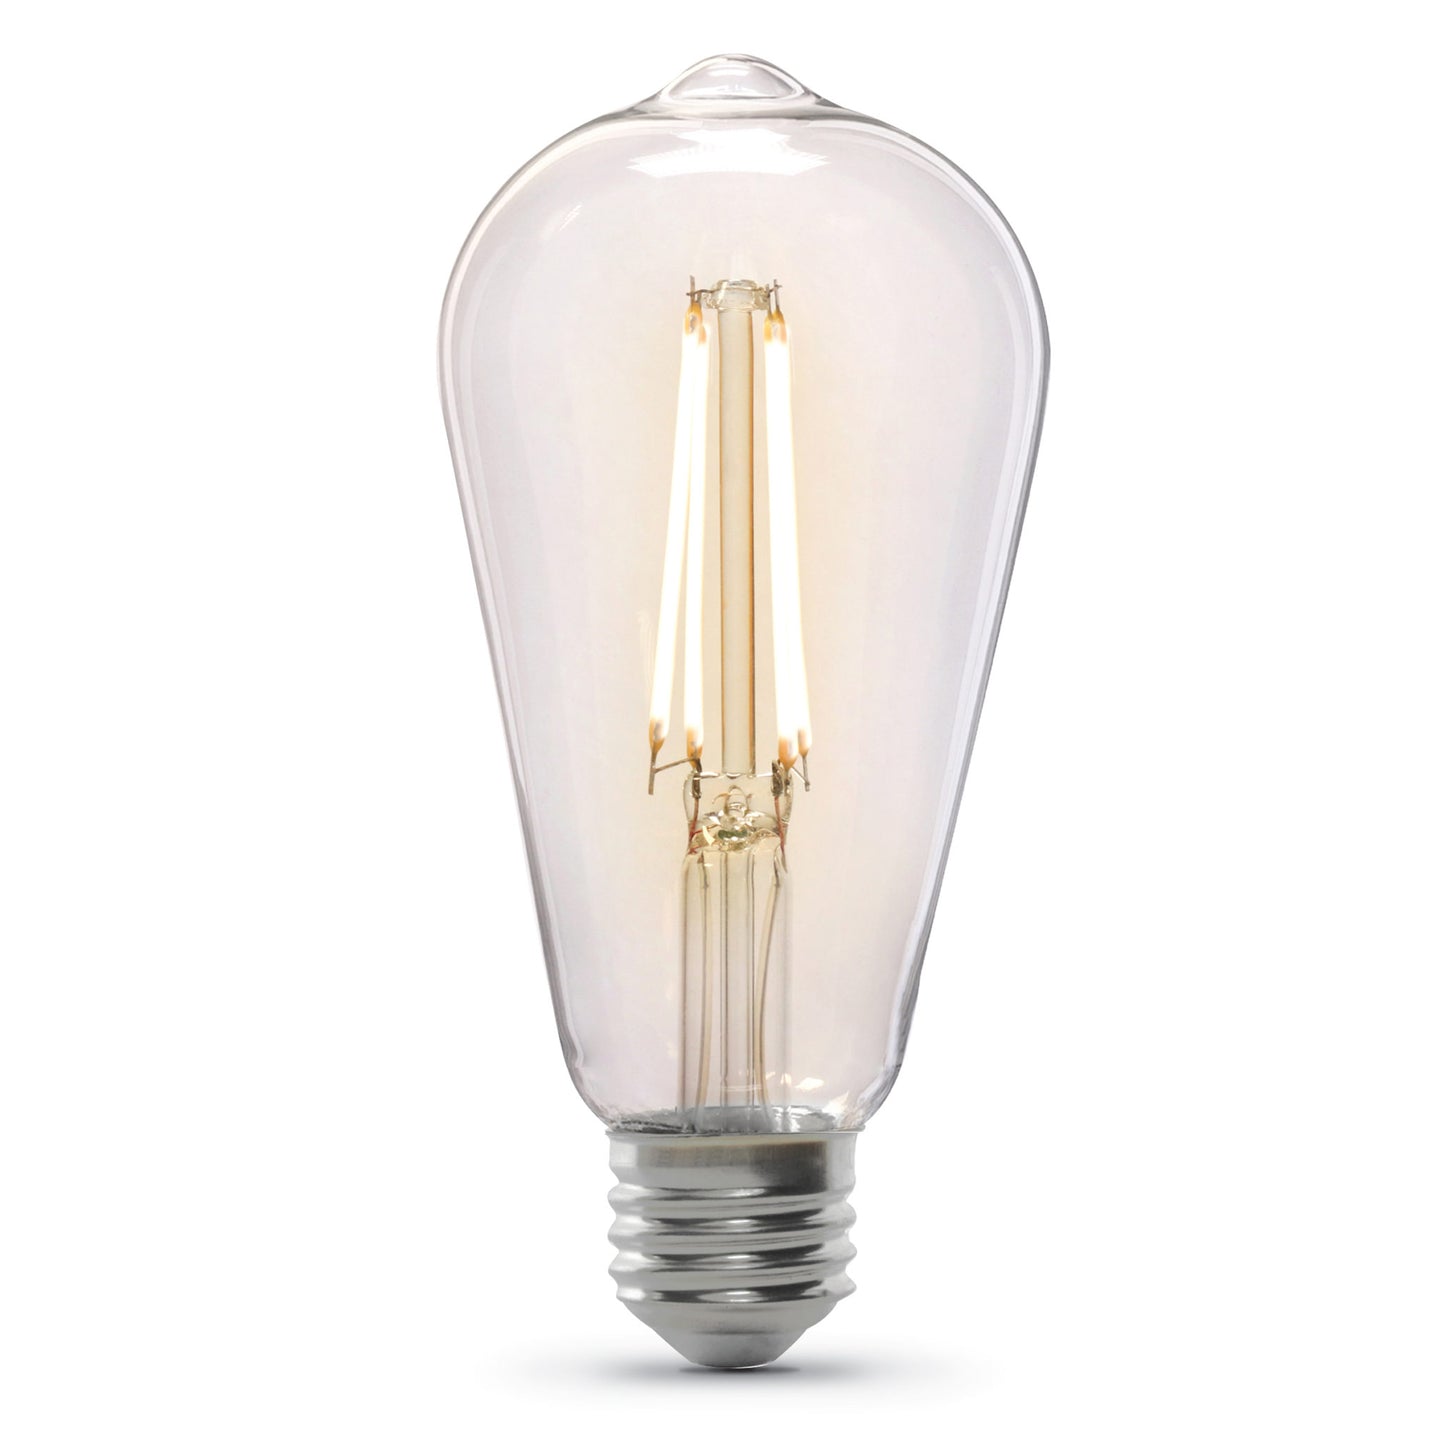 Feit Electric ST19/CL/VG/LED Clear 400 Lumen 21K ST19 Vintage LED Light Bulb